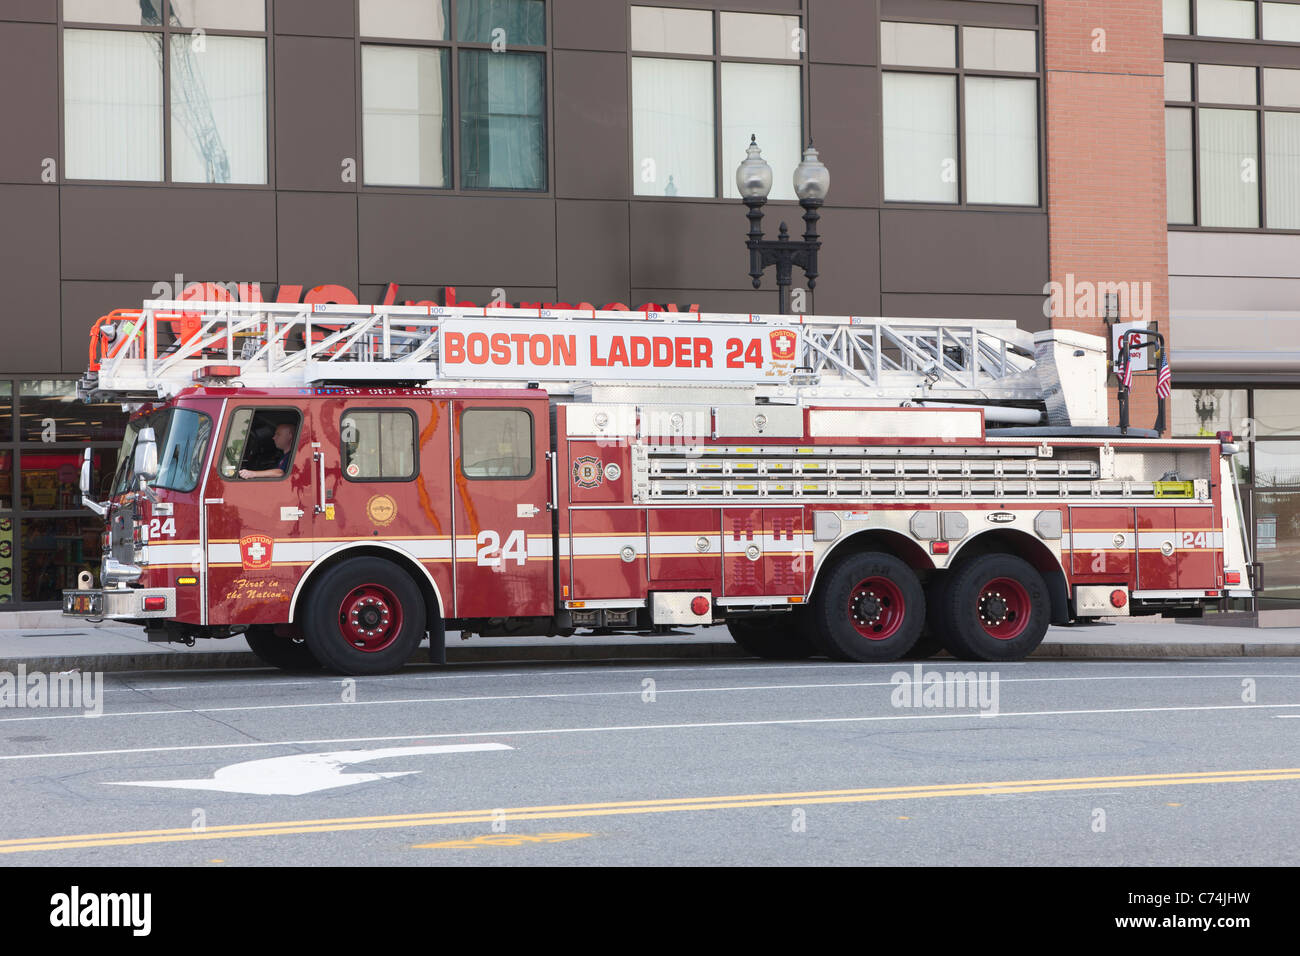 Boston Fire Department Ladder 24 responding to a call on Causeway Street, Boston, Massachusetts Stock Photo